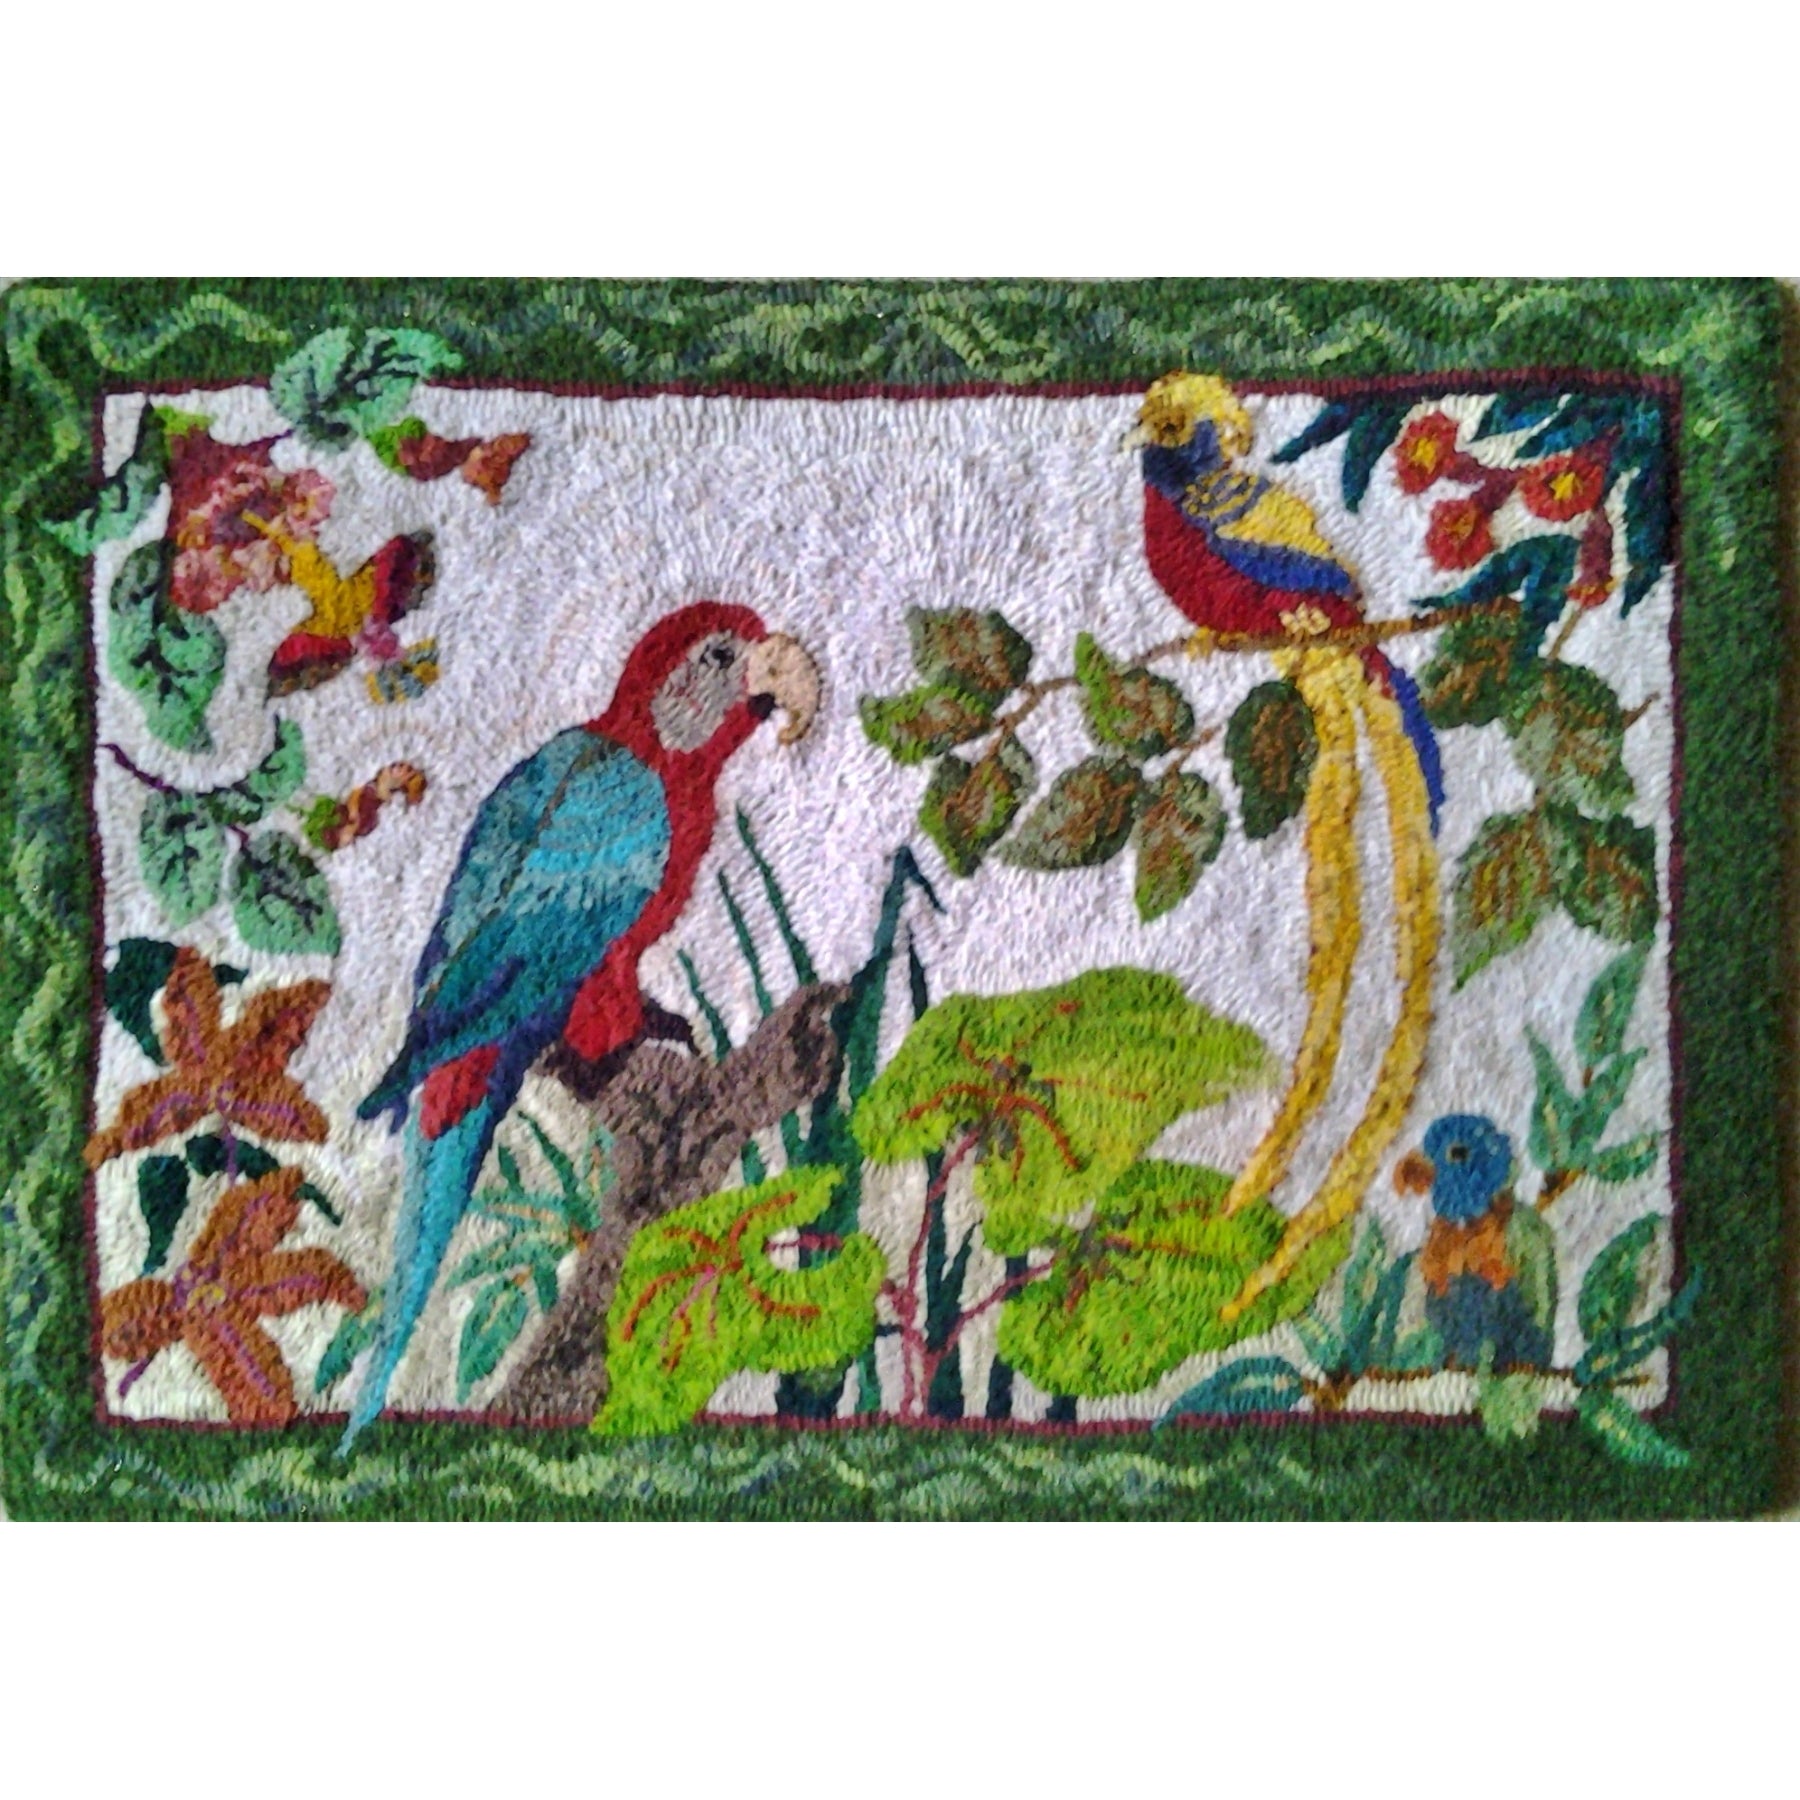 Tropical Birds, rug hooked by Jan Levitt